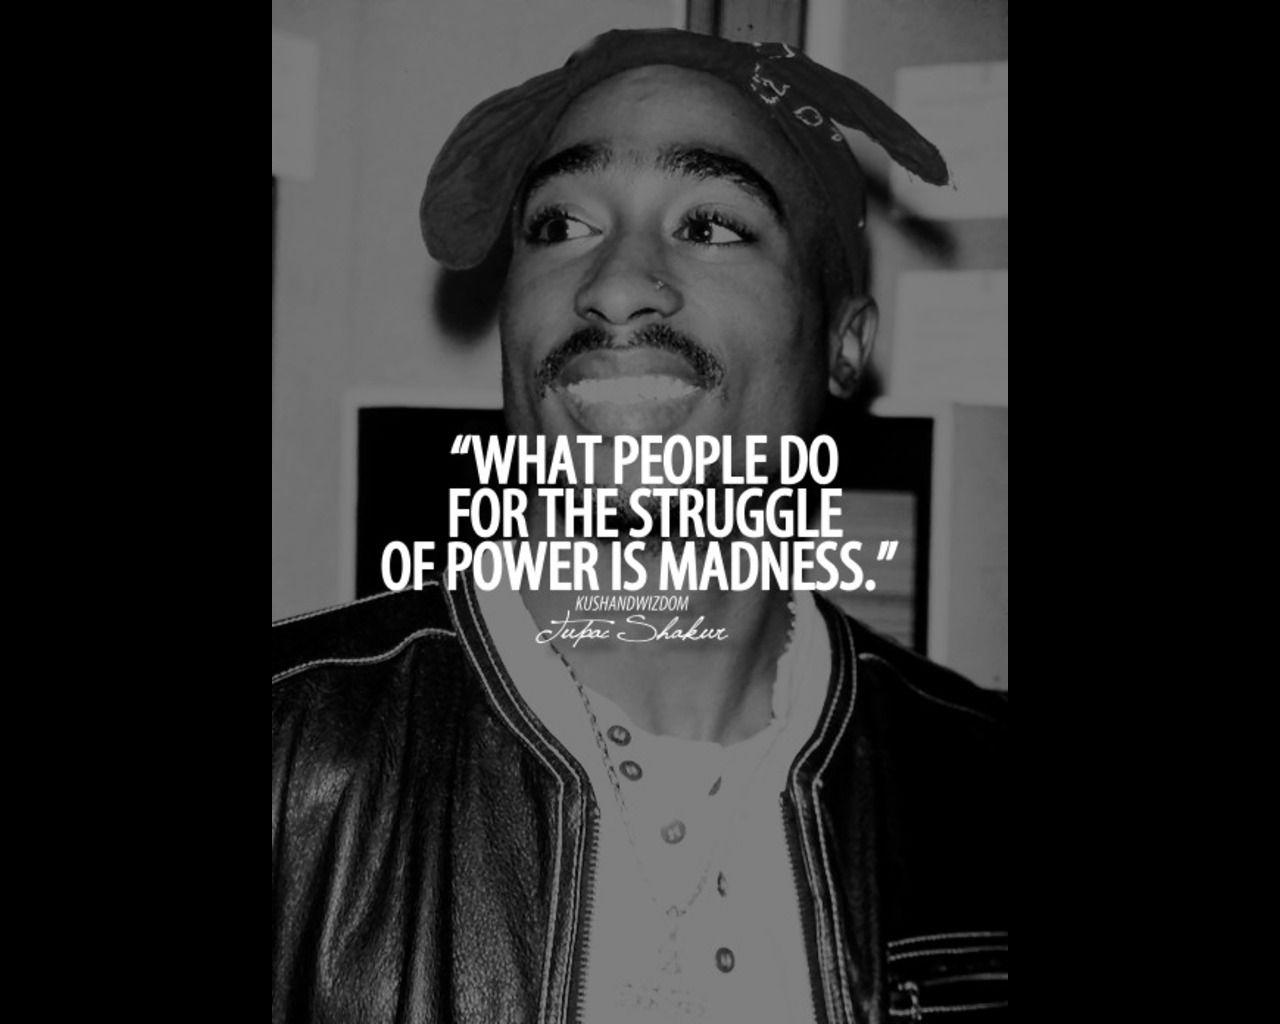 tupac quotes wallpaper hd